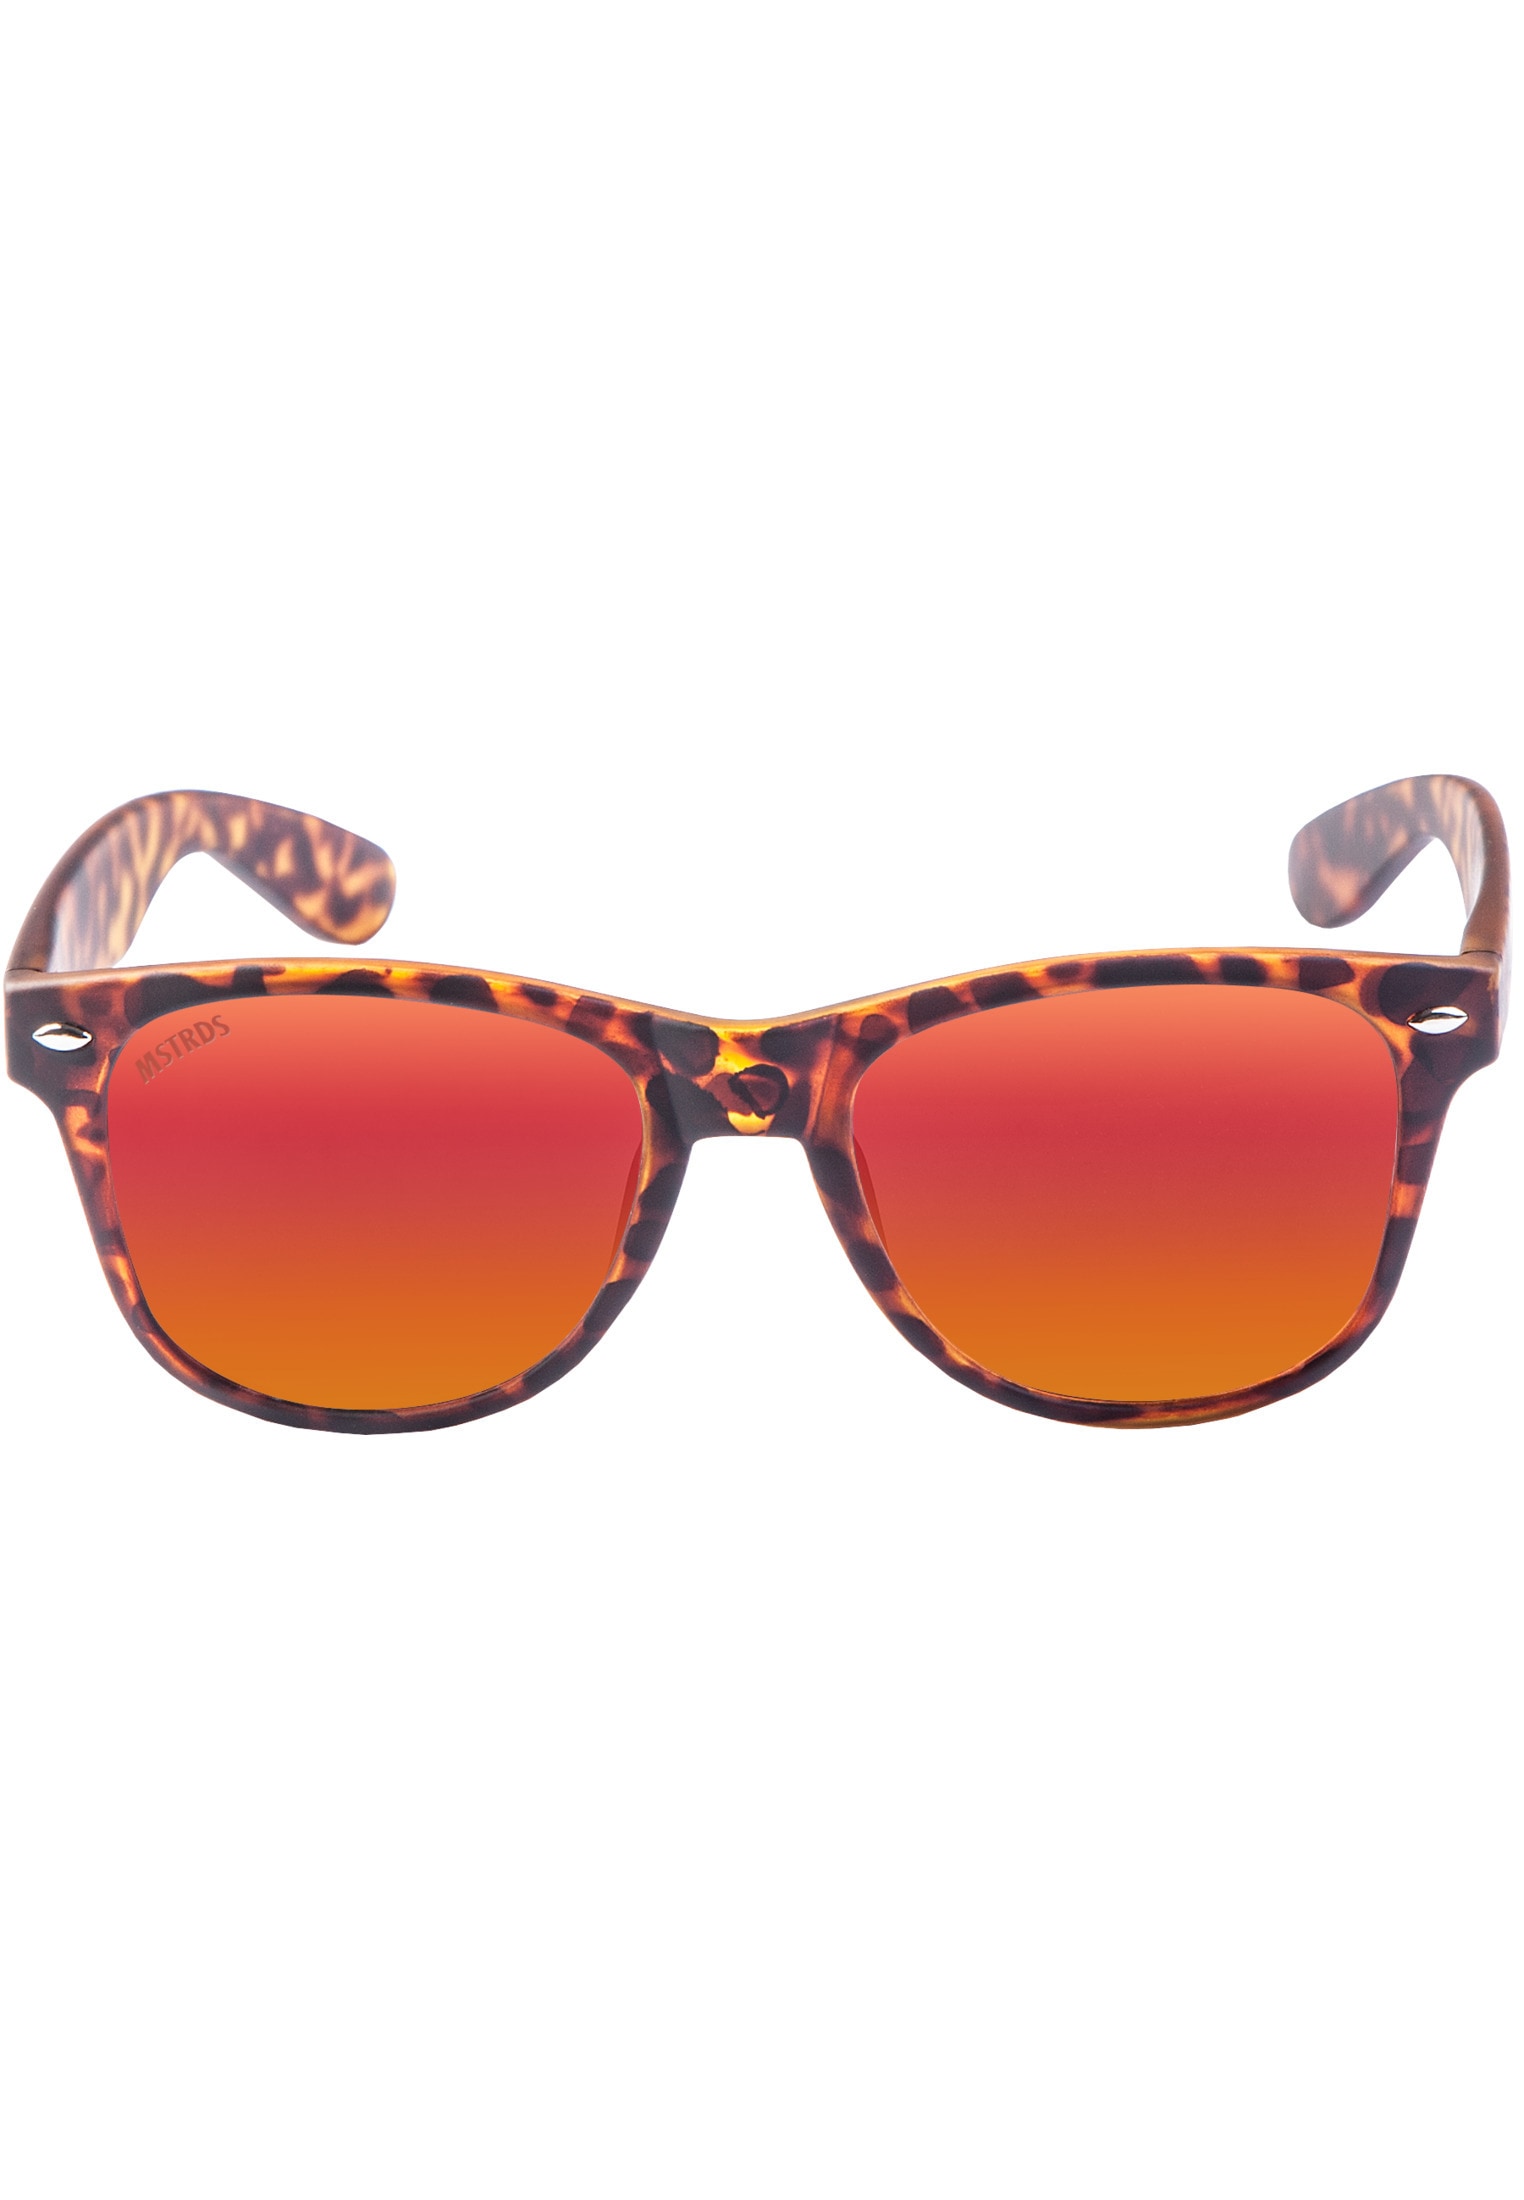 Sunglasses I\'m online »Accessoires kaufen MSTRDS Likoma | Youth« walking Sonnenbrille